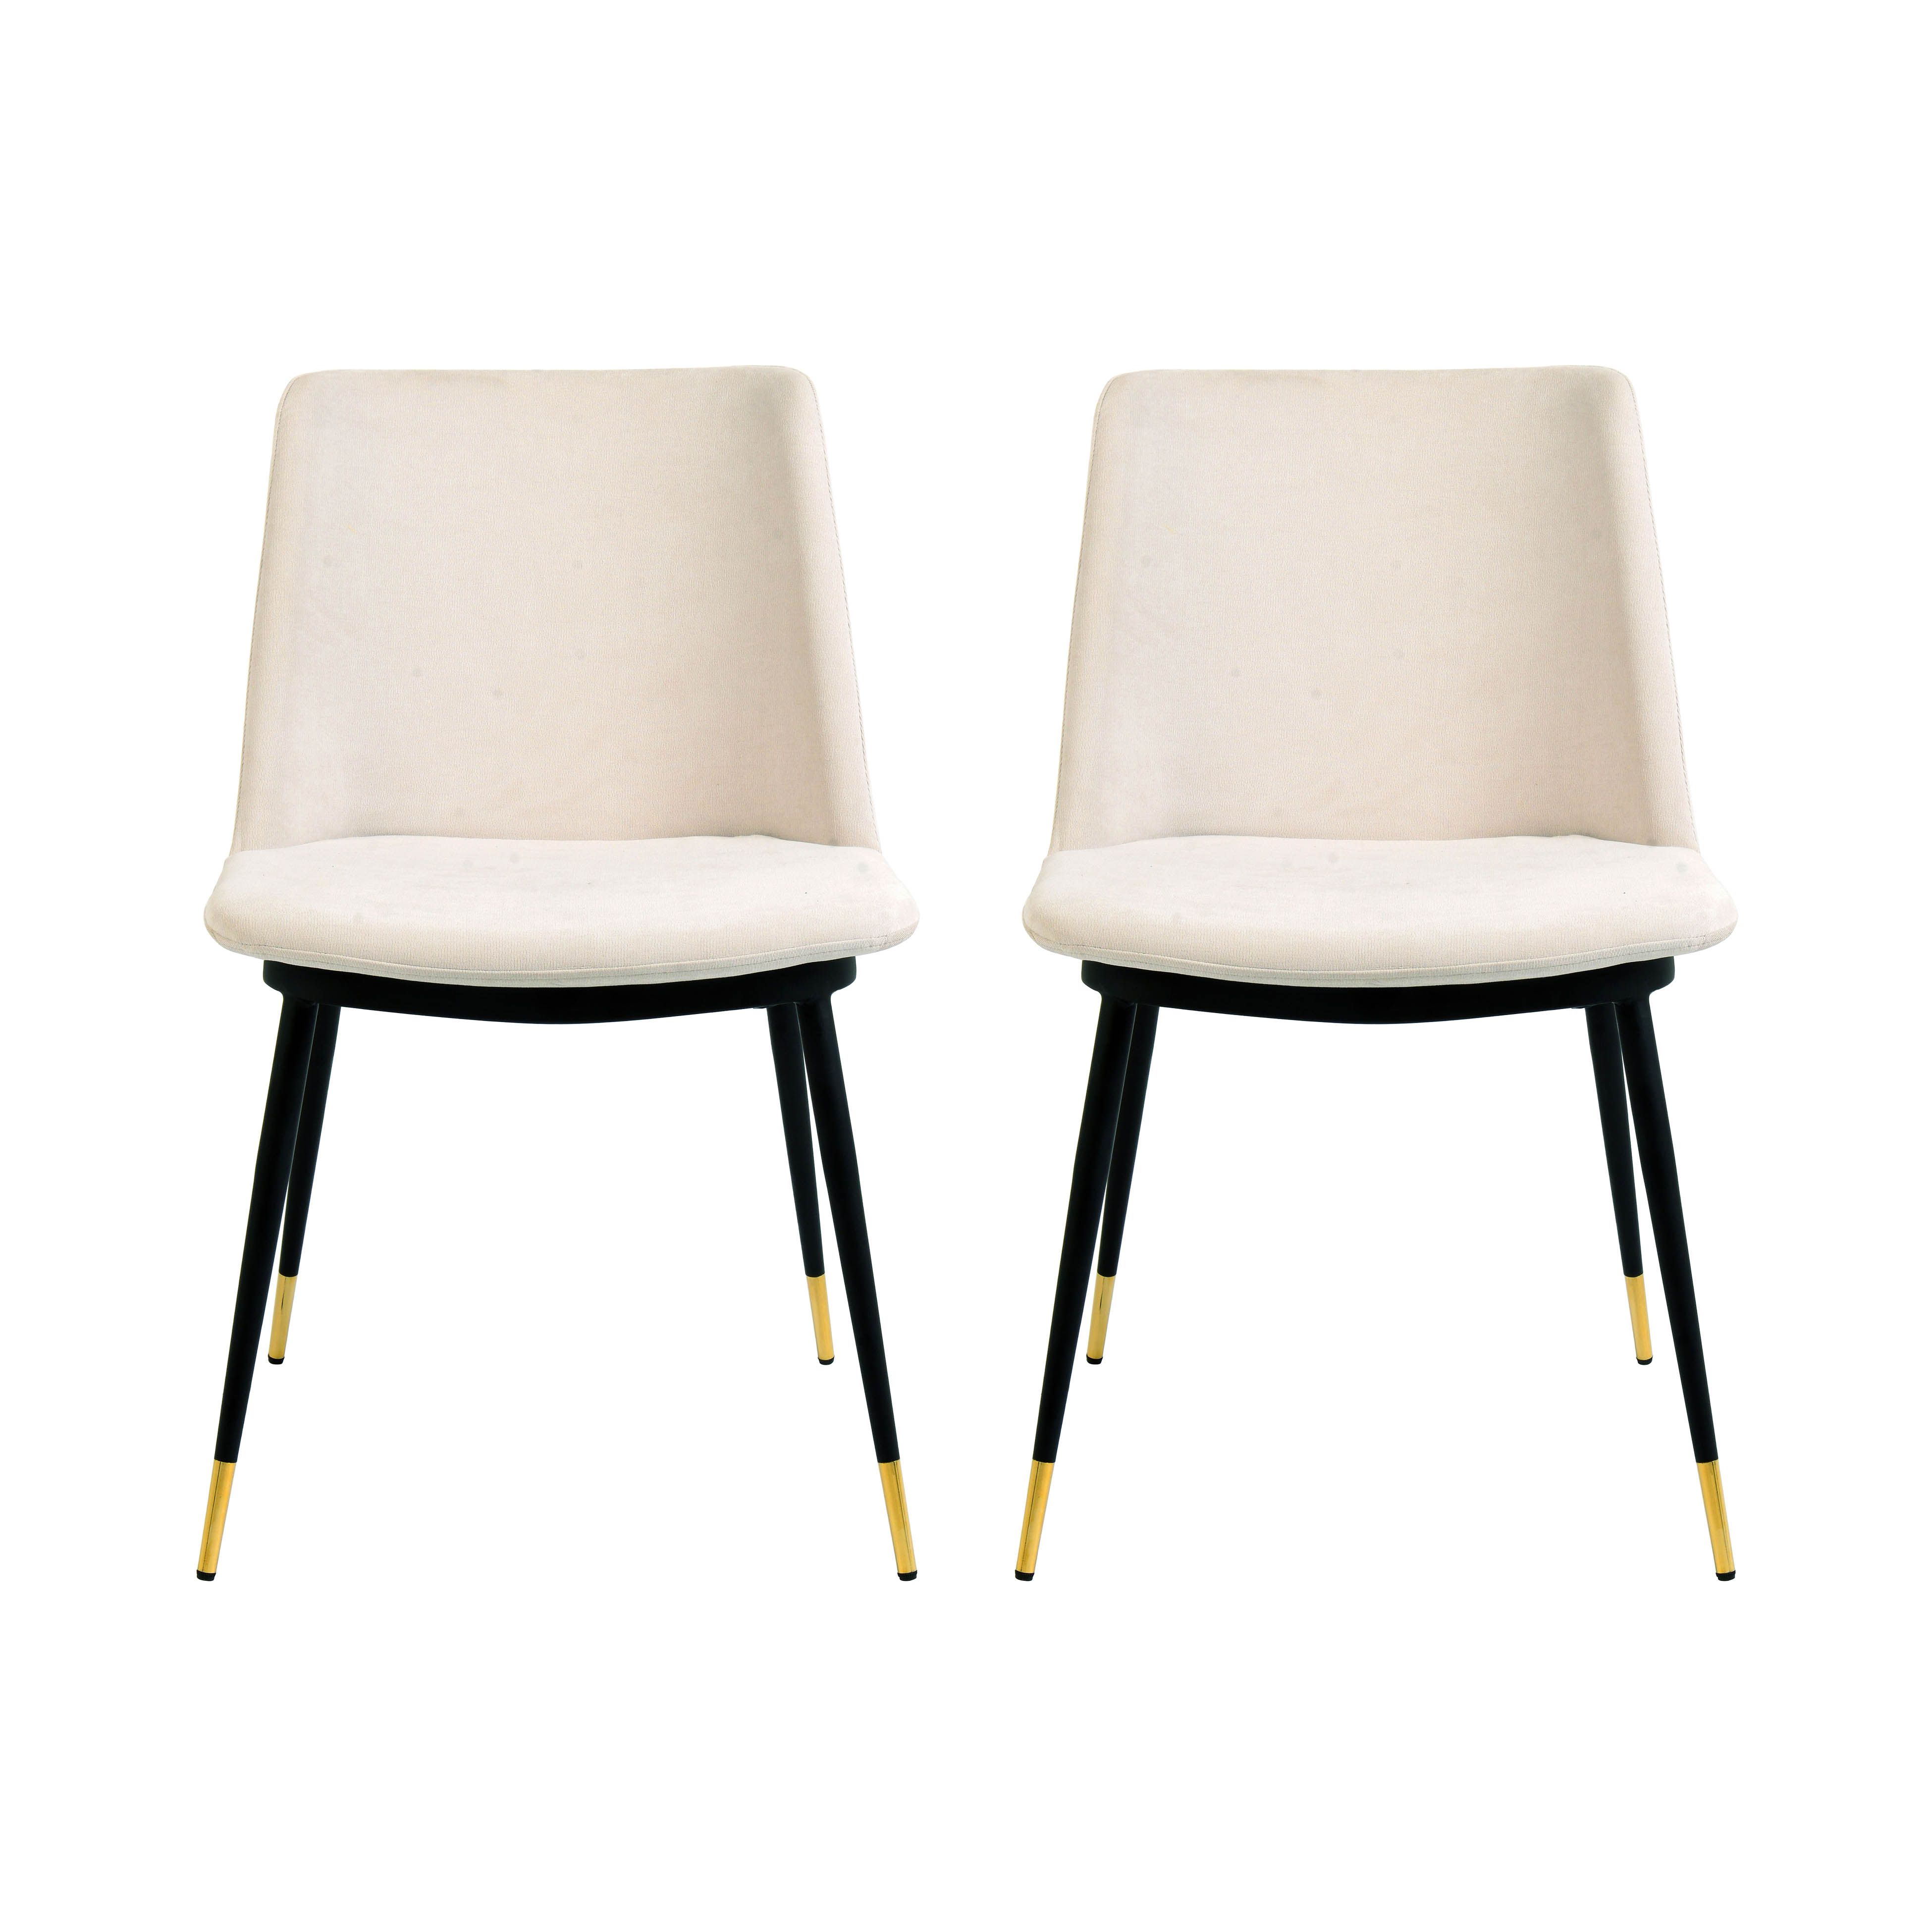 TOV Furniture Evora Cream Velvet Chair with Gold Tipped Legs - Set of 2 | Walmart (US)